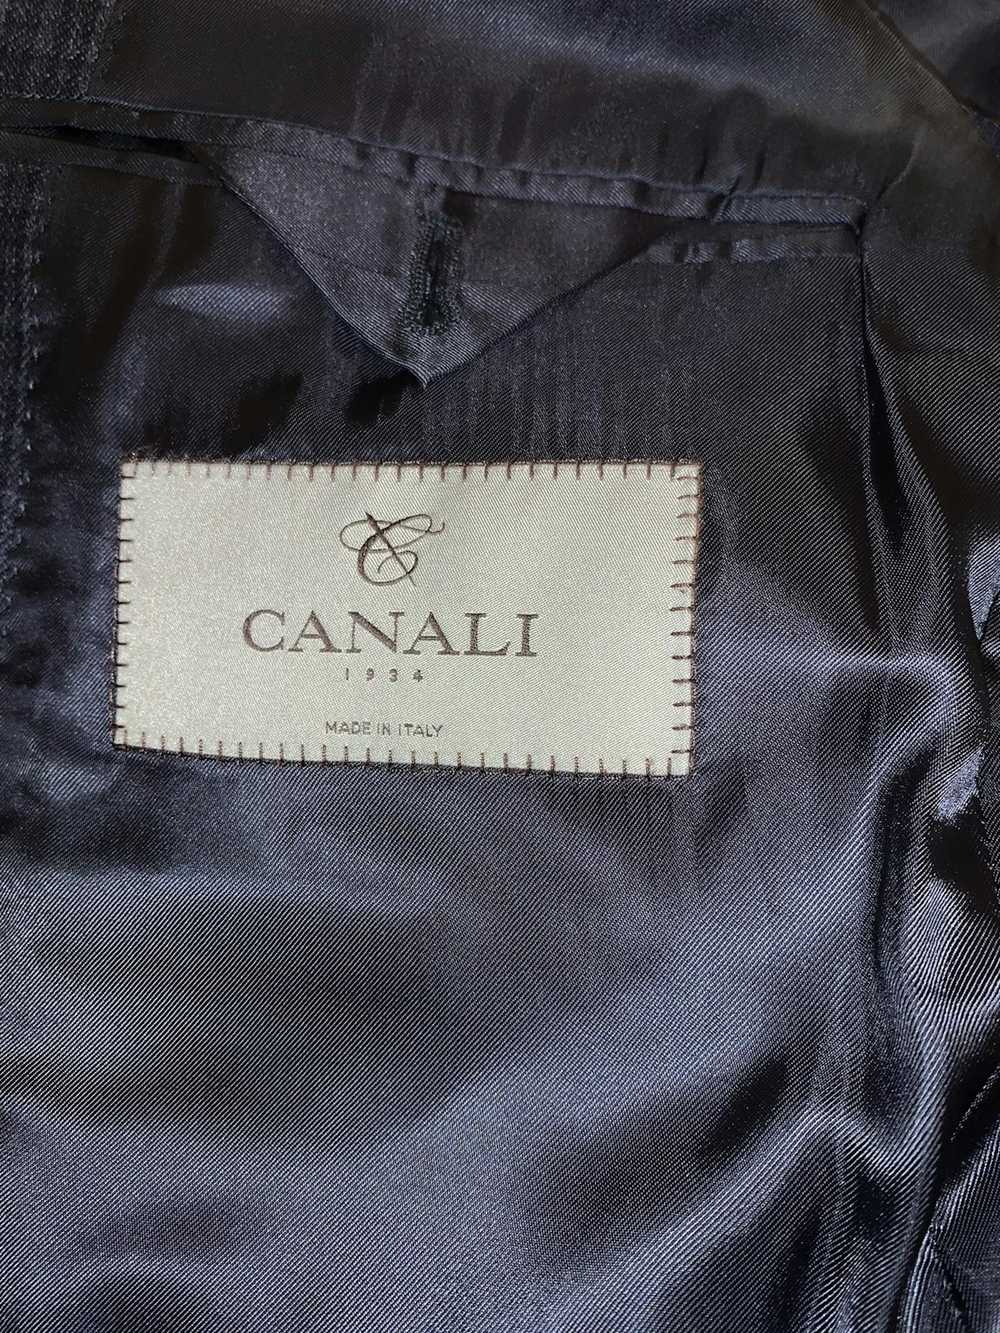 Canali Canali Dark Blue Check Blazer - 40R - image 2